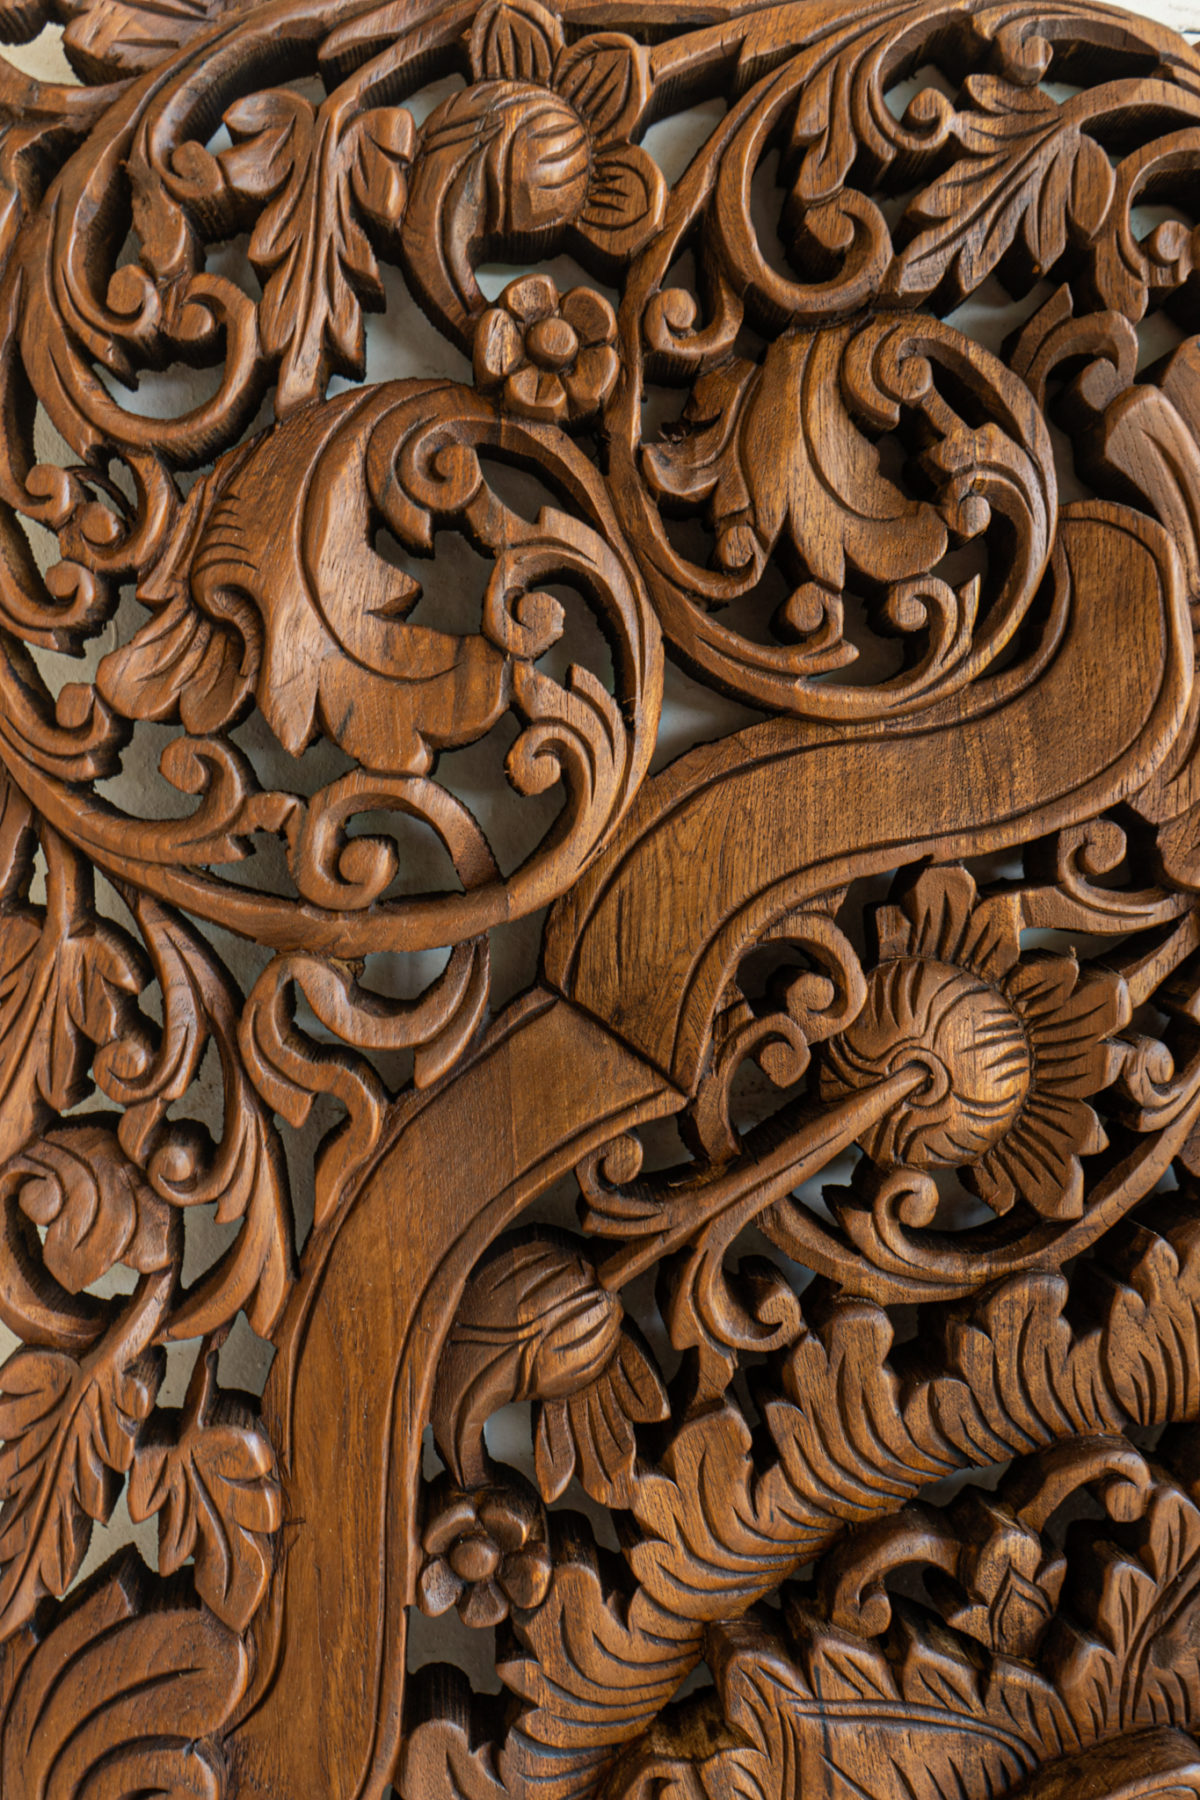 Sculpted wood carving in teak